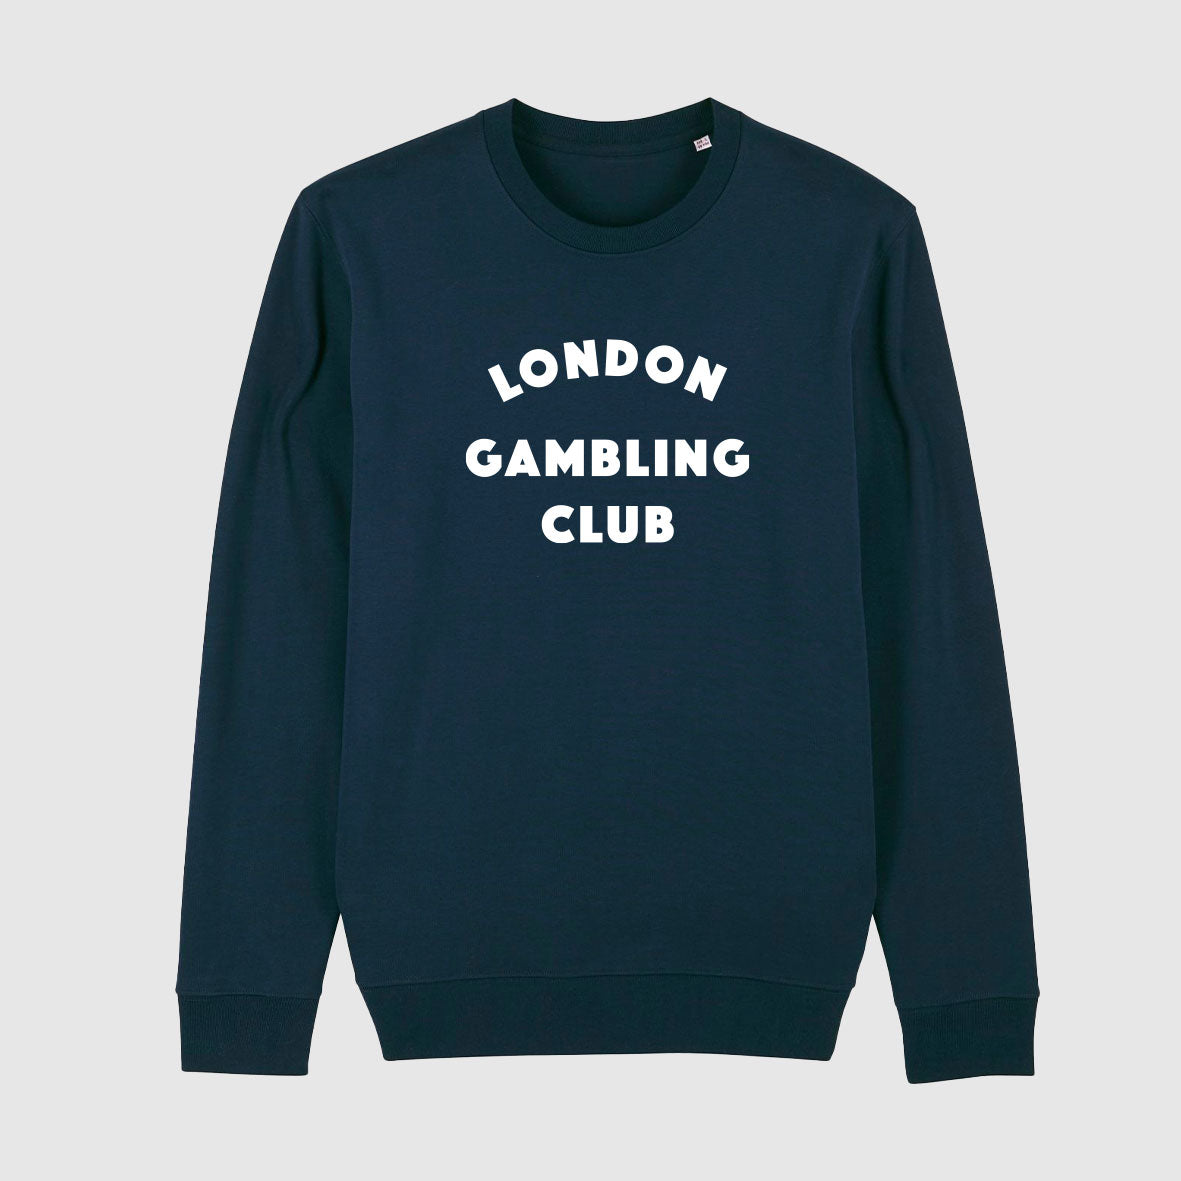 Sweat London Gambling Club